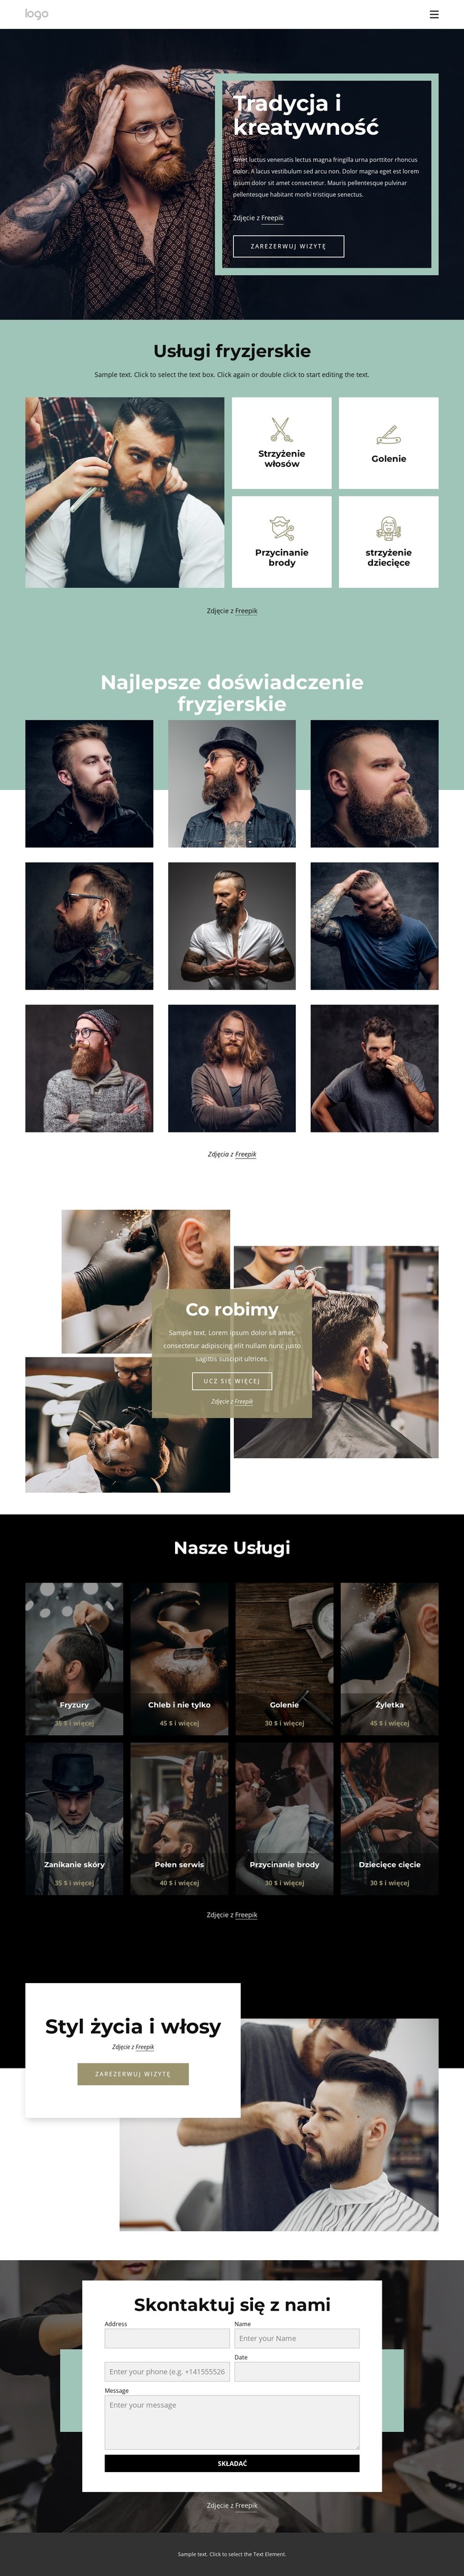 Ogólnodostępny salon fryzjerski Szablon HTML